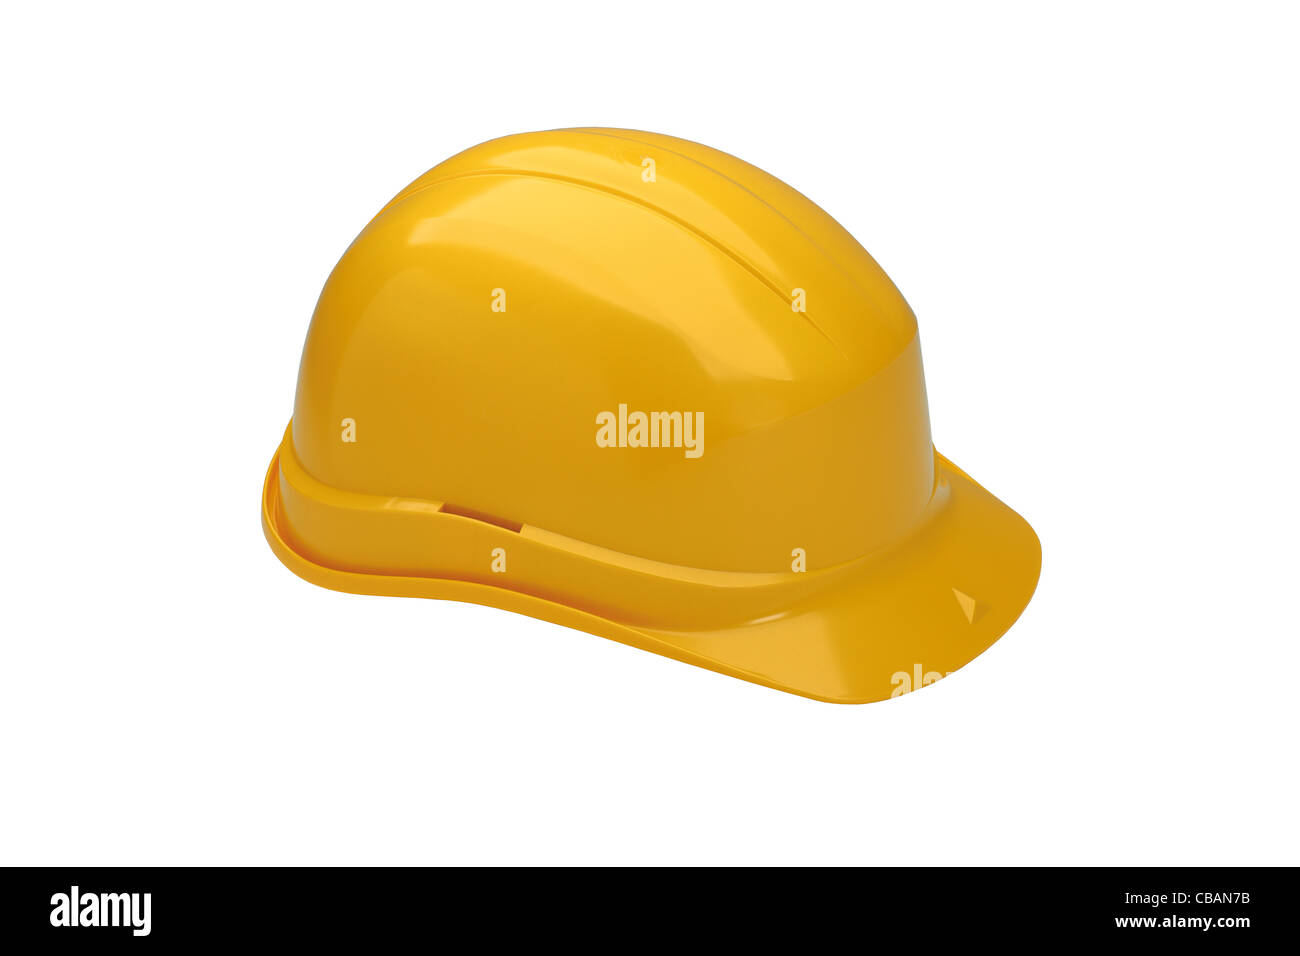 The yellow crash helmet isolated on white background Stock Photo